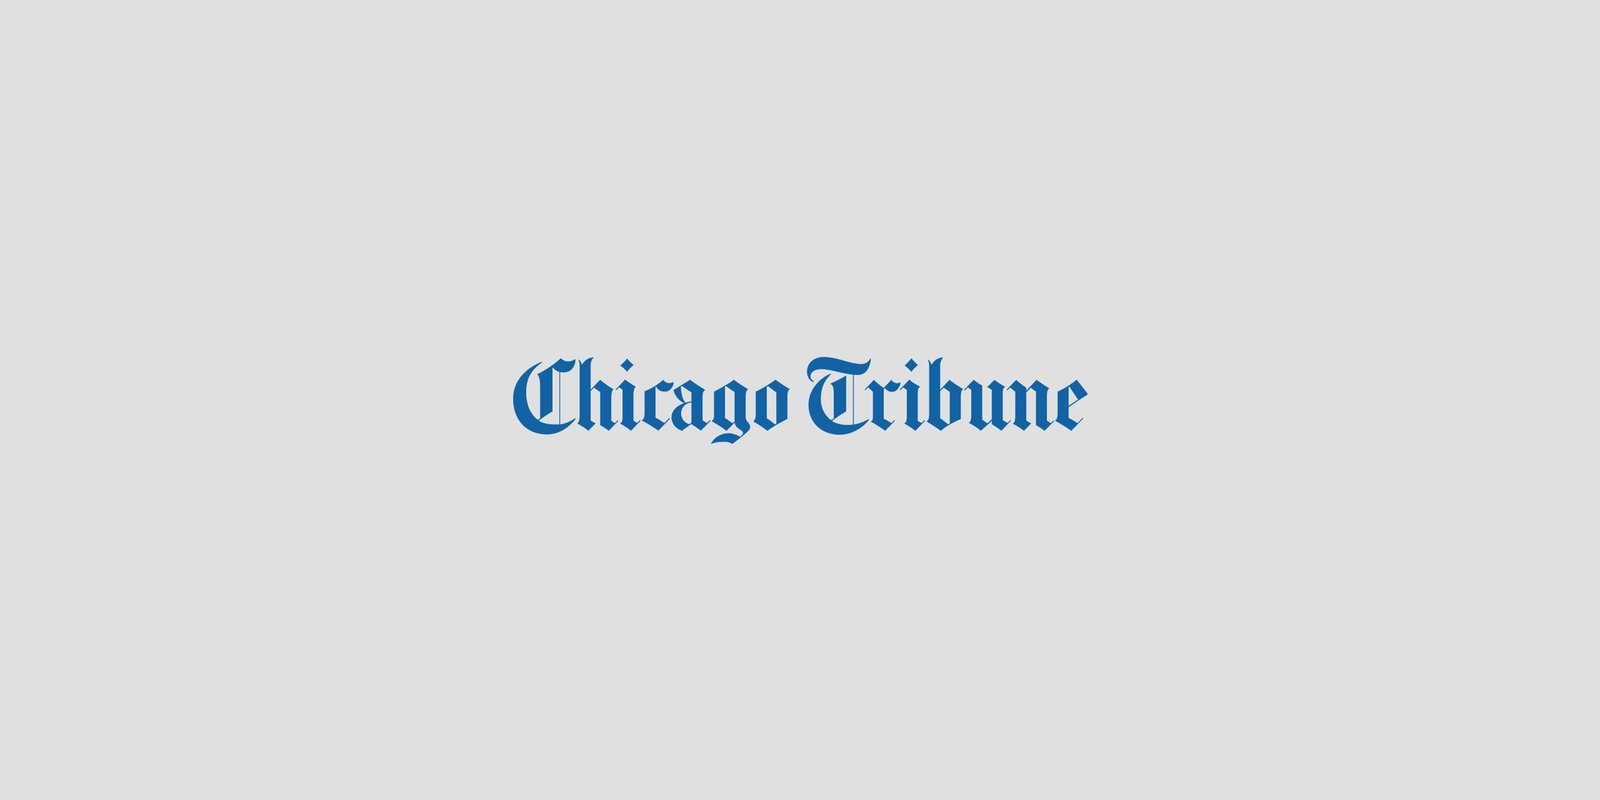 Chicago Tribune: Meet Unagi, Design-Savvy and Adult-Friendly